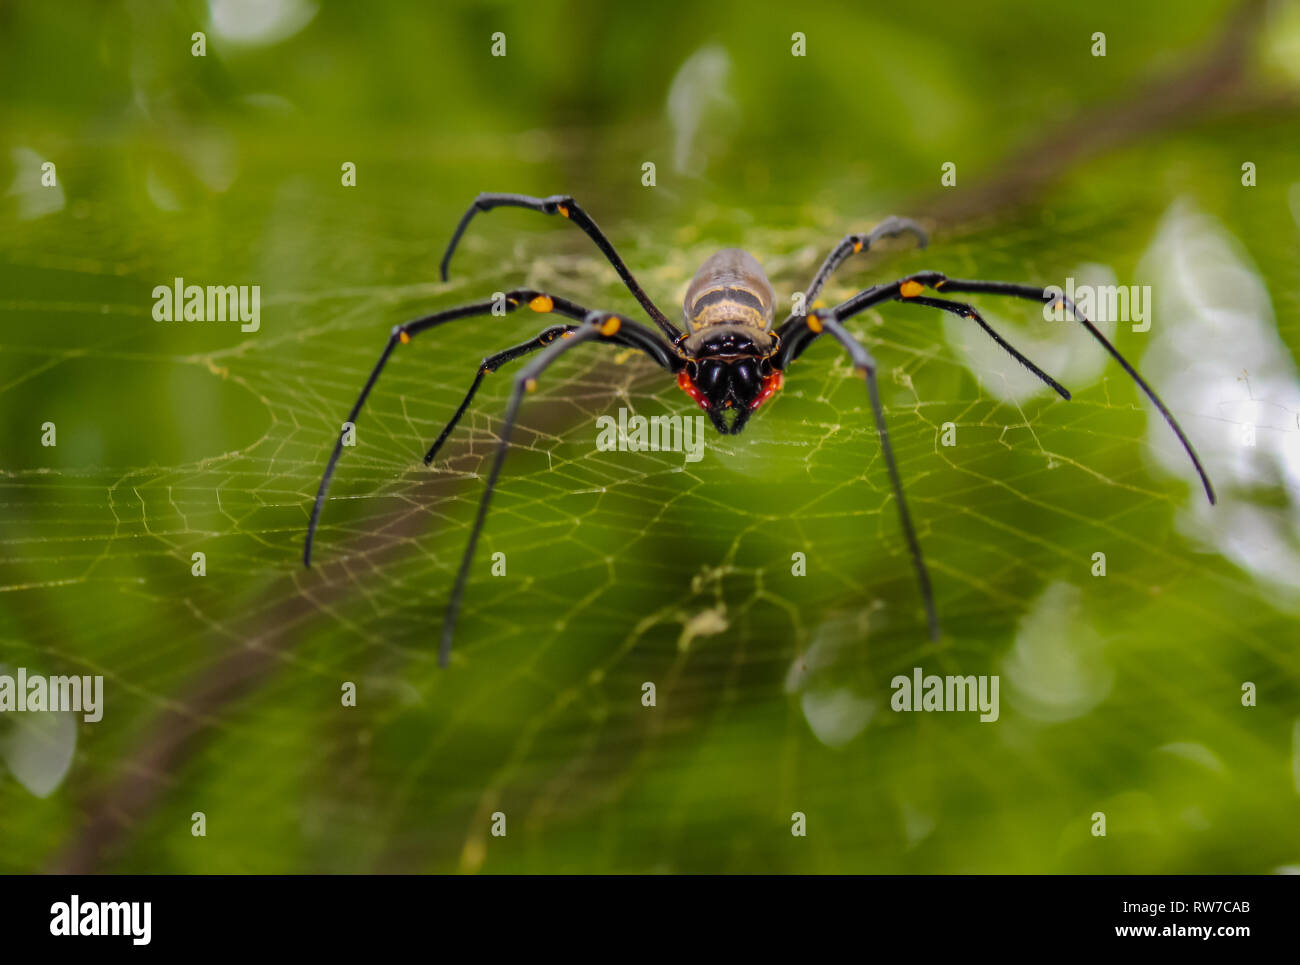 giant spider in web looking in the camera, travel adventure Australia rainforest animal portrait, fear arachnophobia Stock Photo